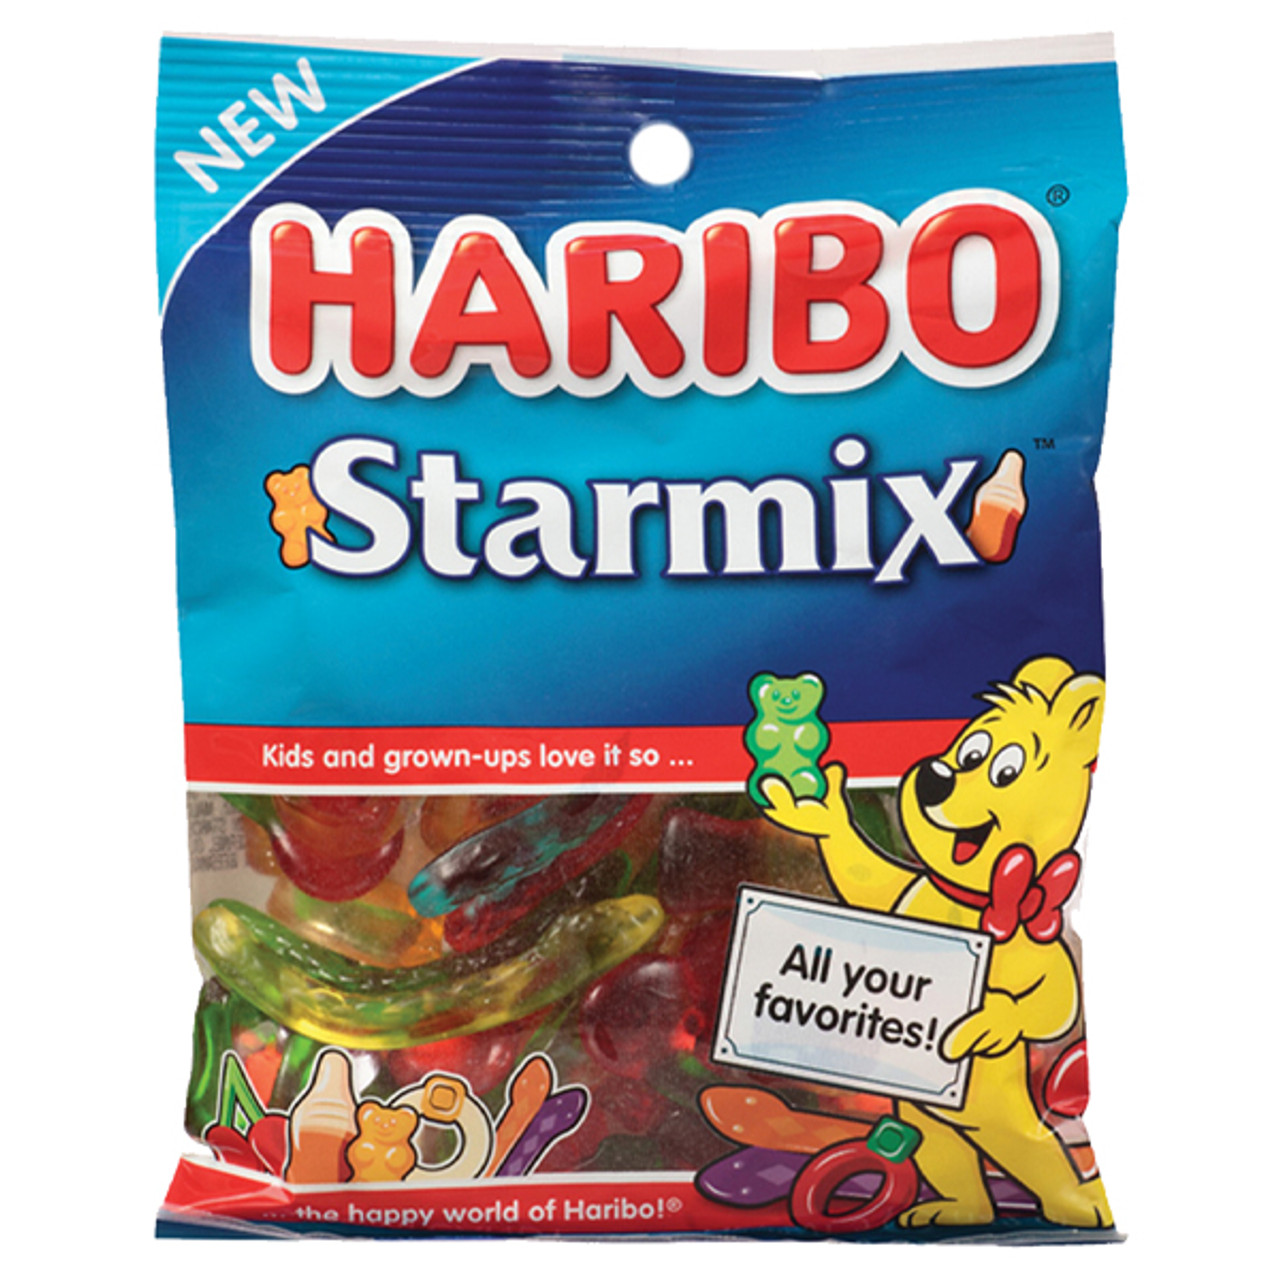 HARIBO Gummi Candy, Starmix, 5 oz. Bag (Pack of 12)